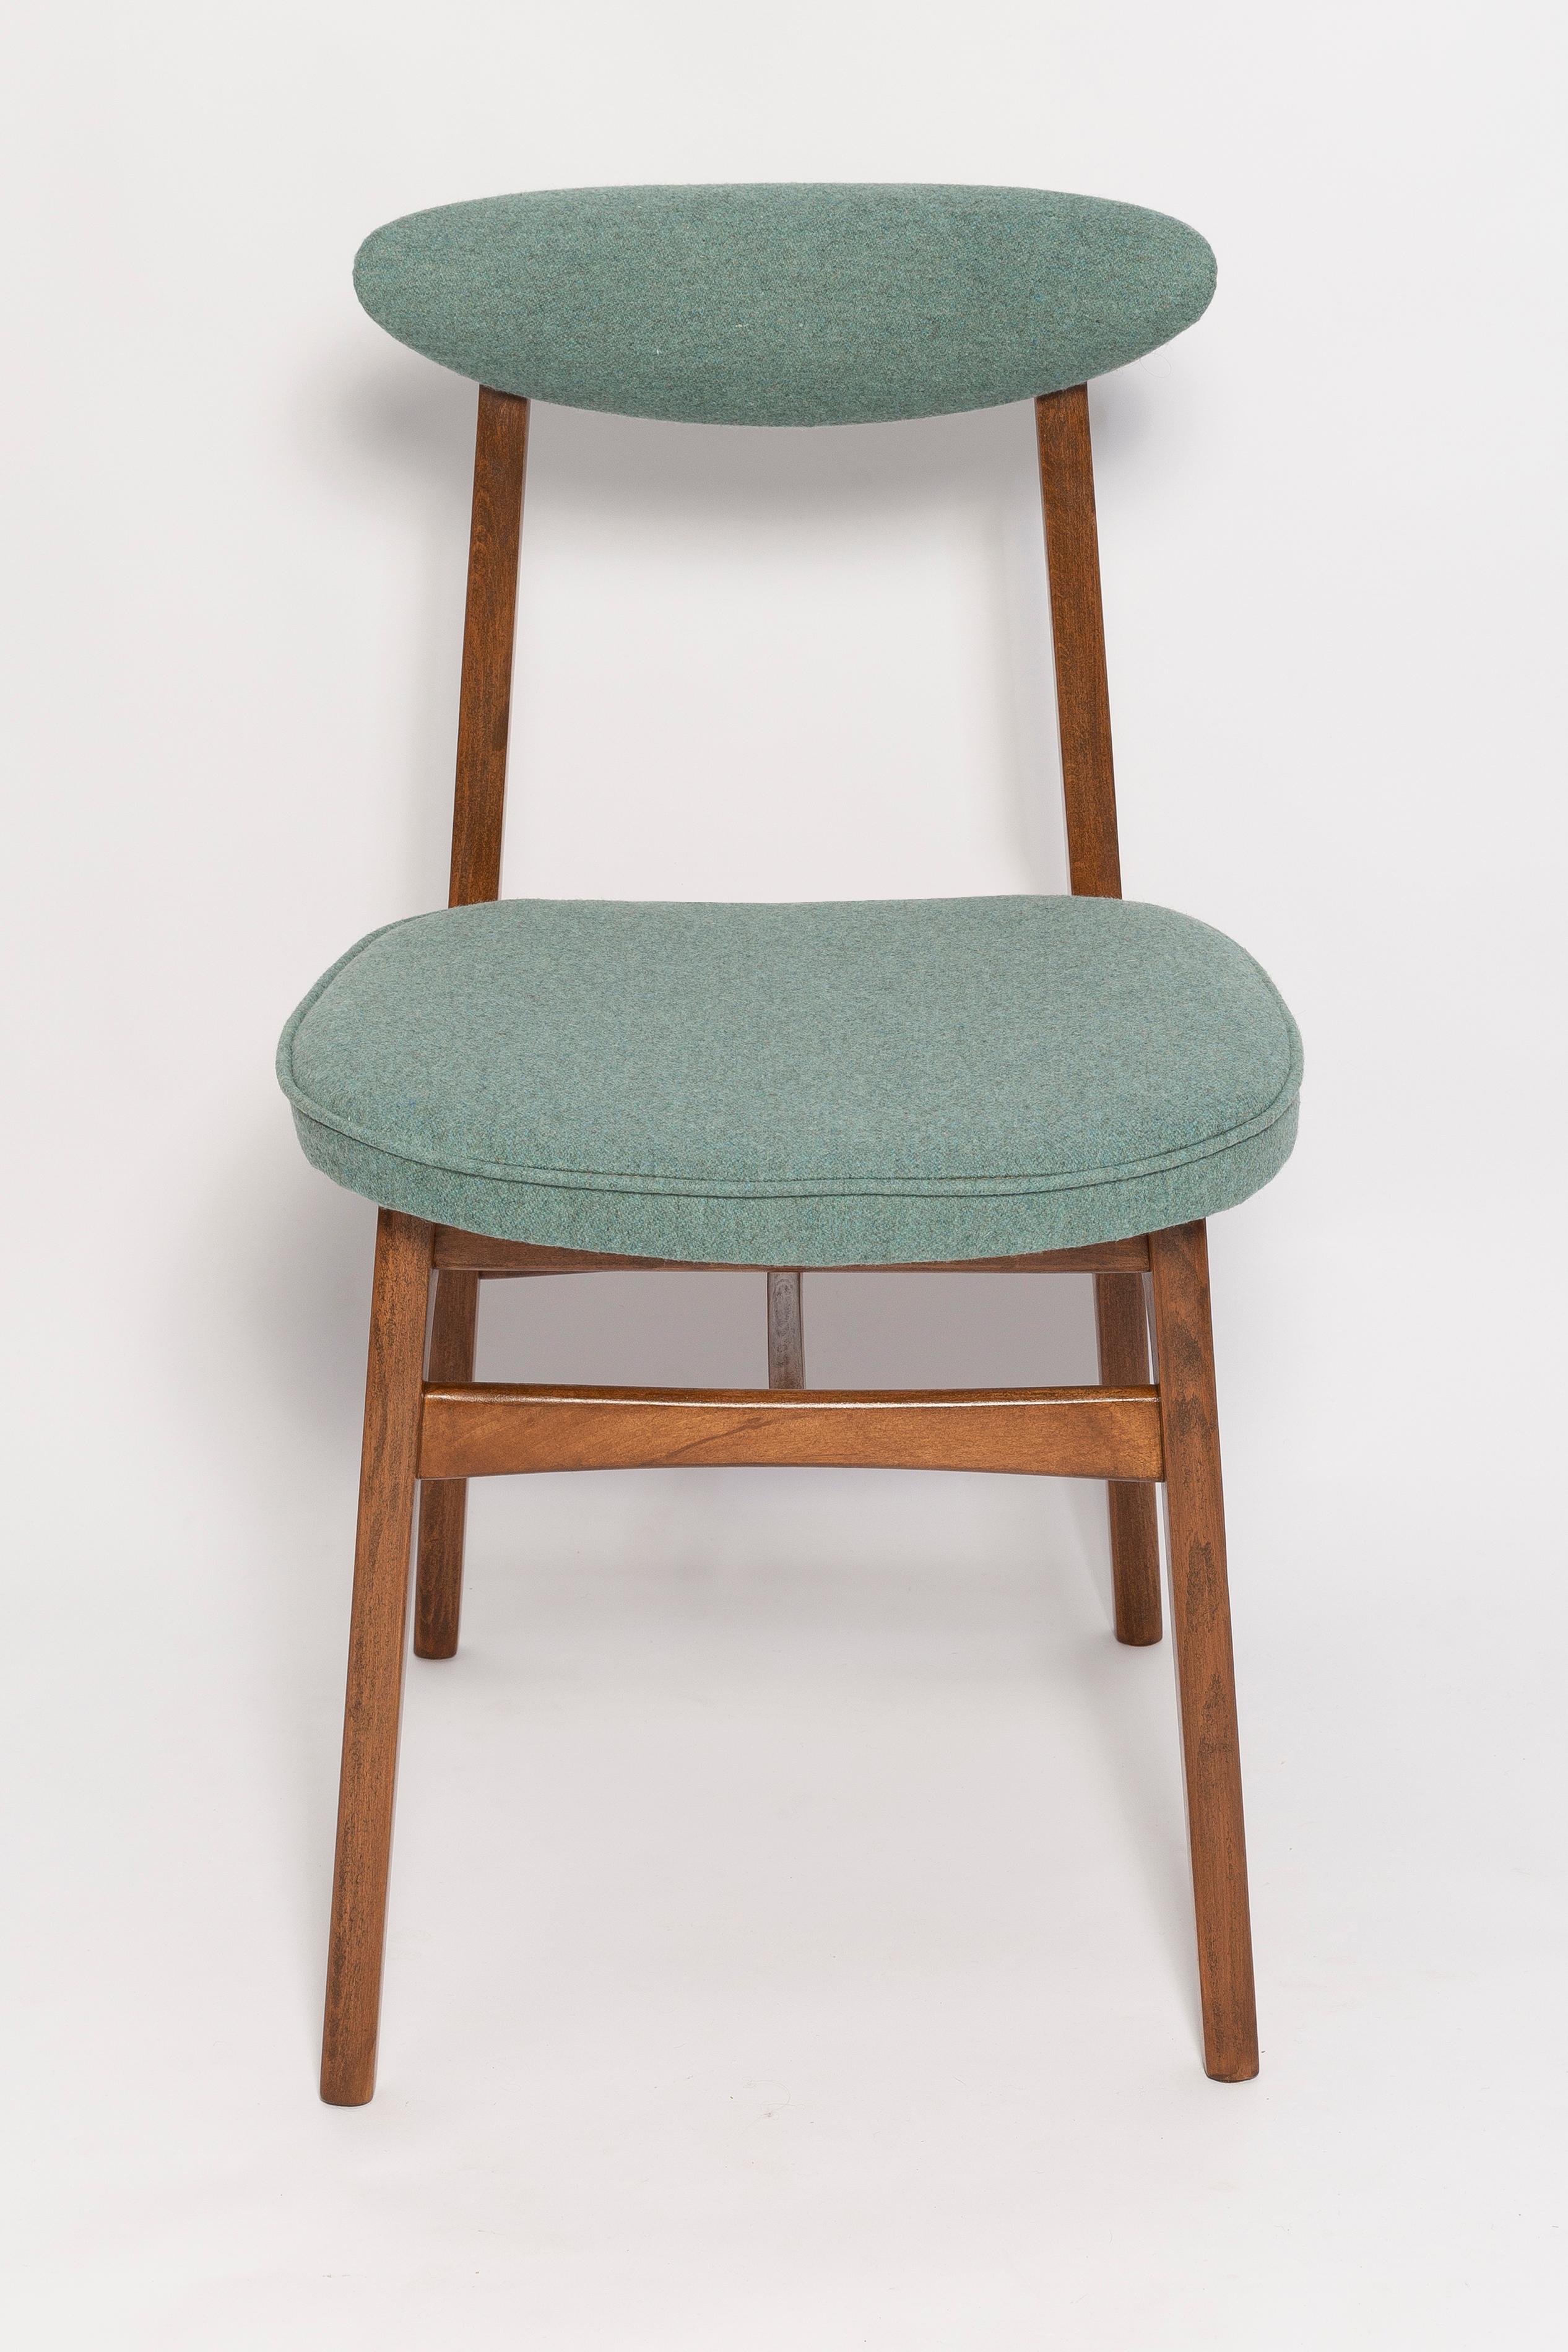 20th Century Mid Century Green Velvet Chair, Walnut Wood, Rajmund Halas, Poland, 1960s For Sale